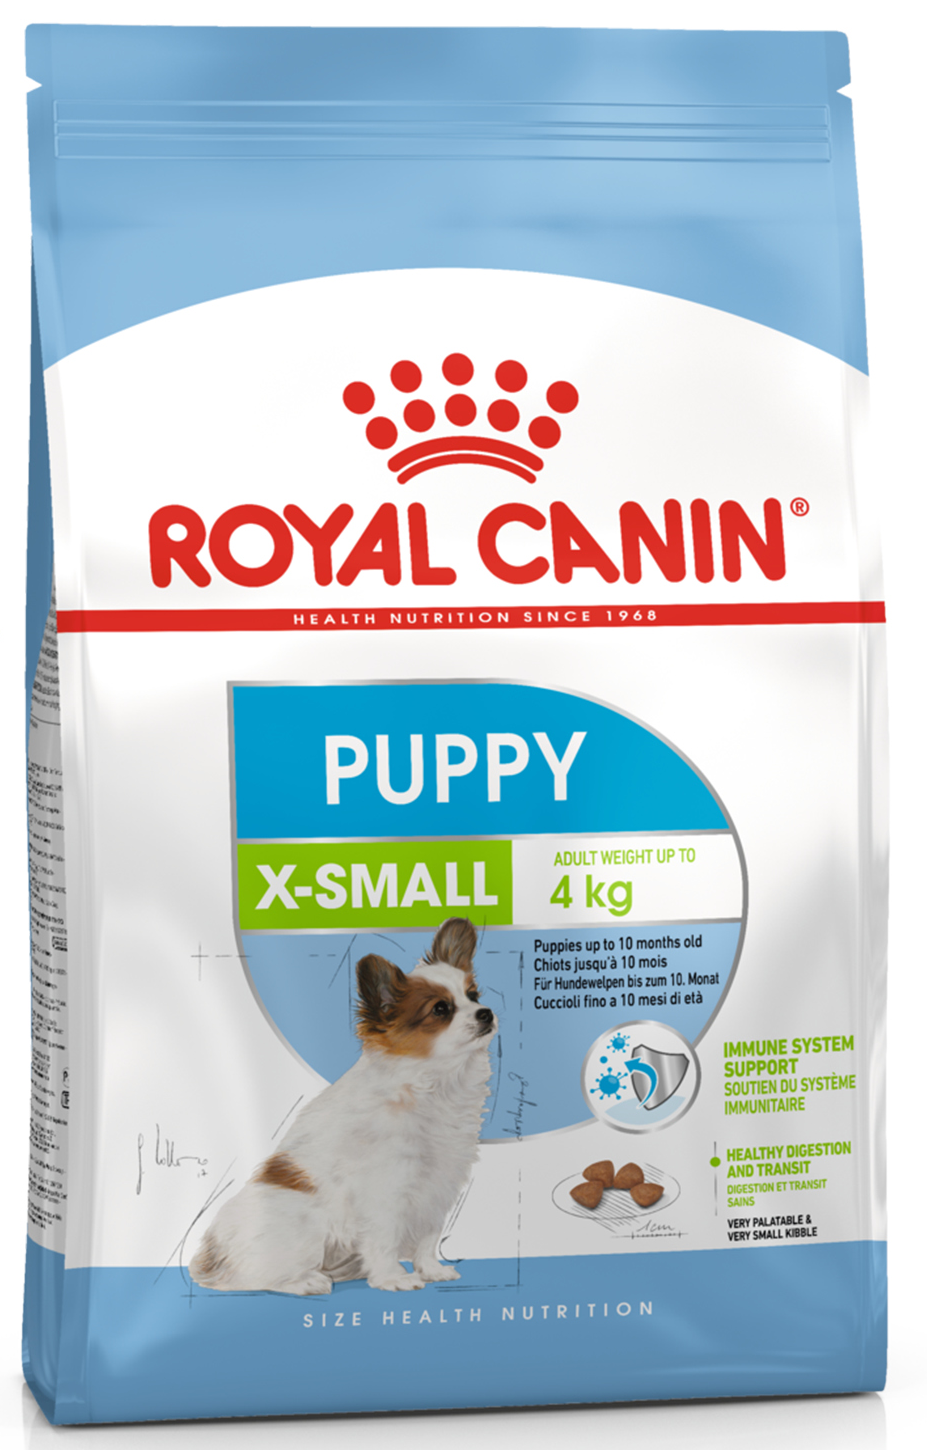 ROYAL CANIN X-Small Puppy Dog Food